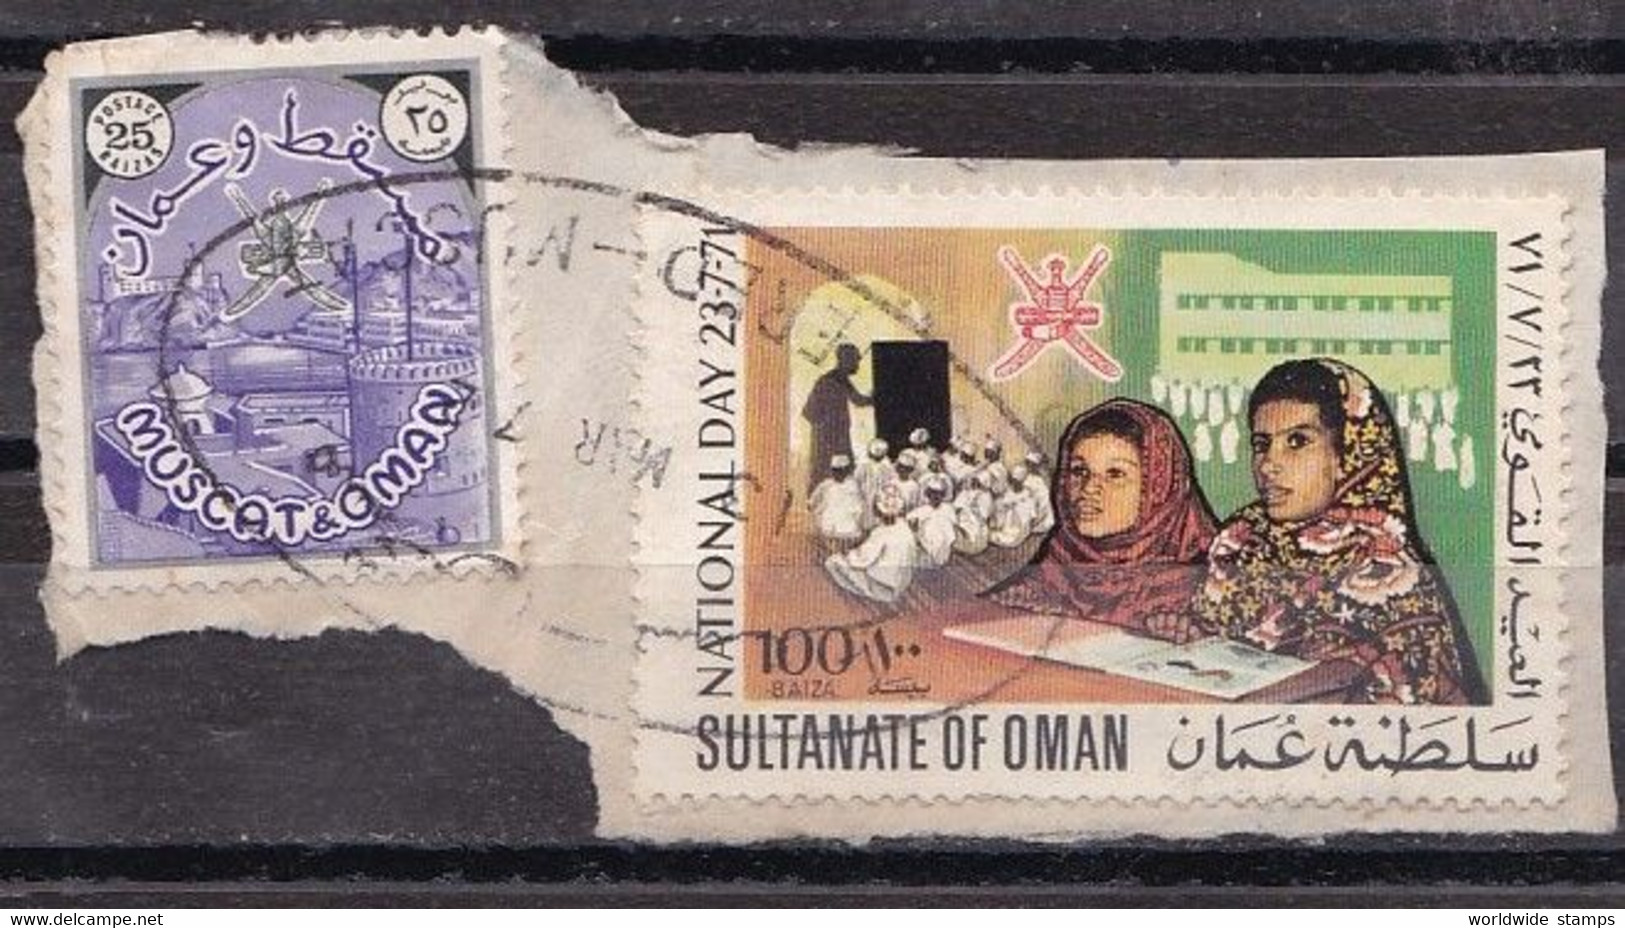 Oman 1972 25 BAIZA PURPLE, NATIONAL DAY USED, - Oman